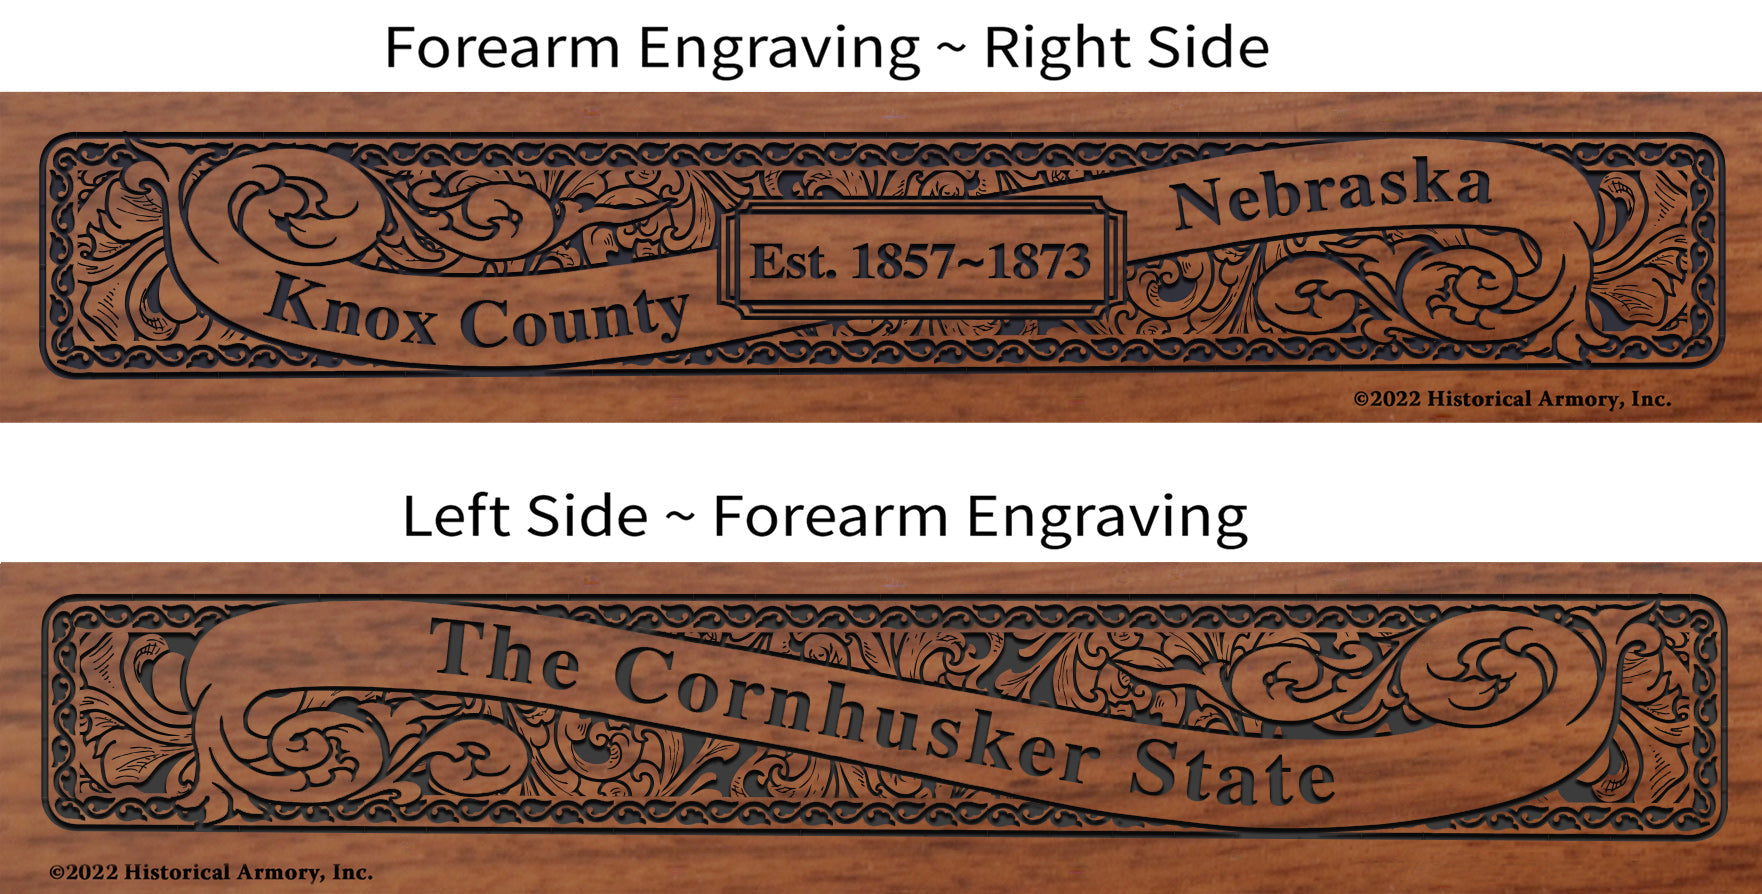 Knox County Nebraska Engraved Rifle Forearm